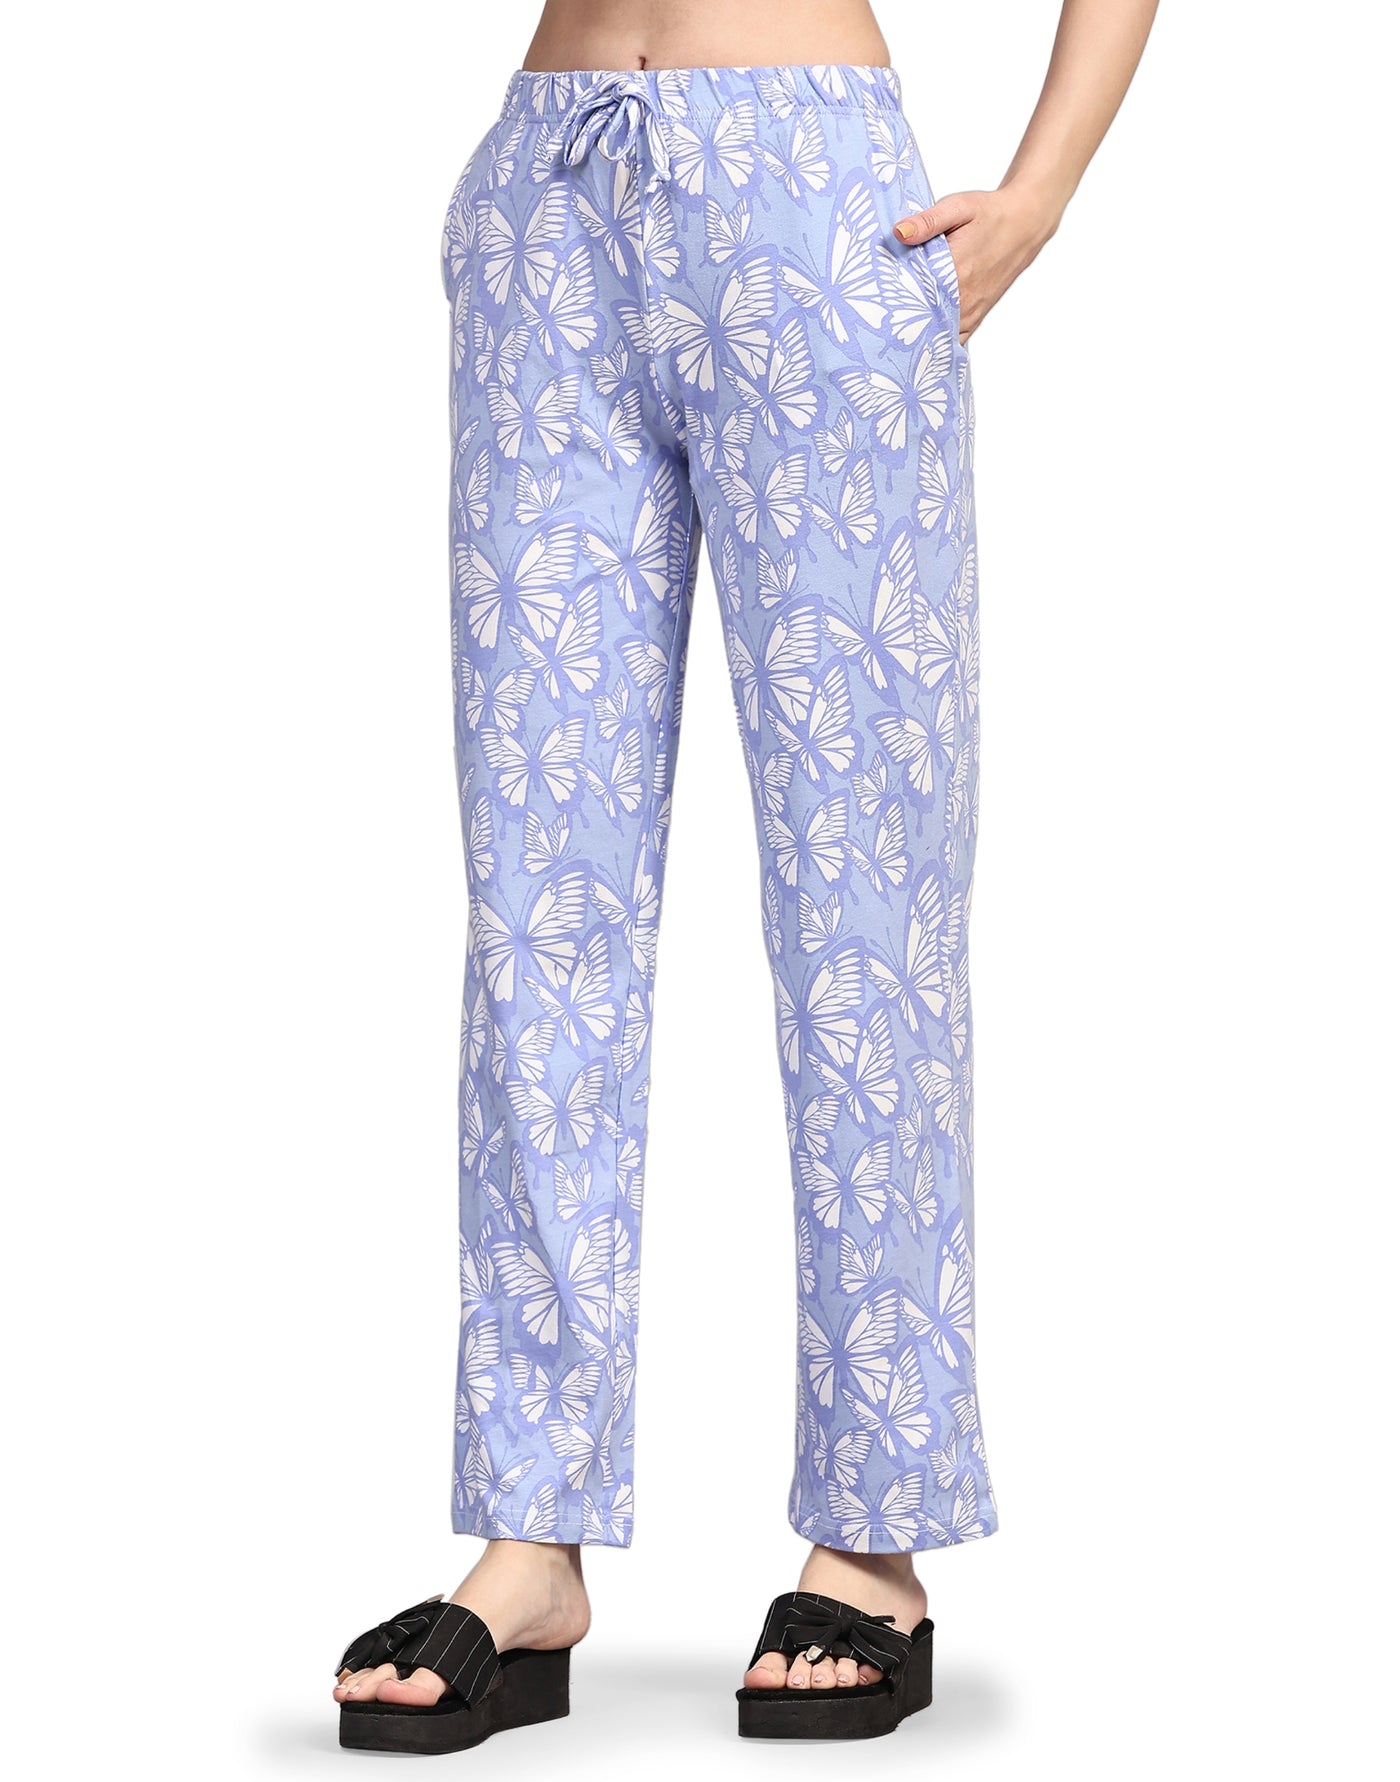 Pyjama Set for Women-Light Blue Butterfly Print